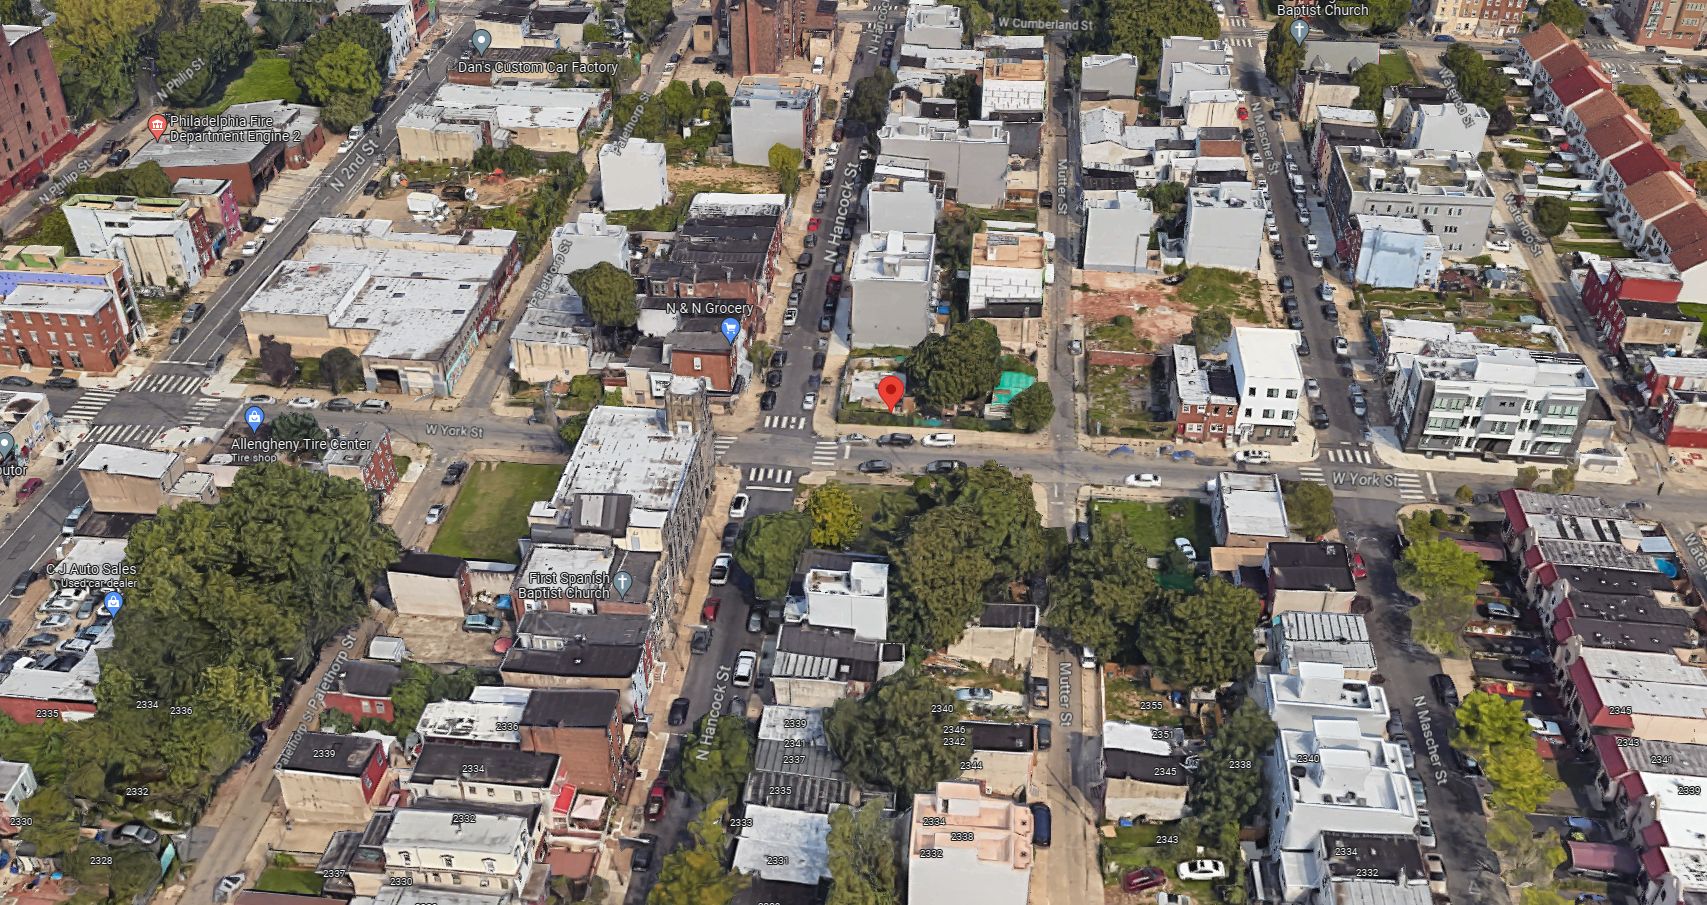 2401 North Hancock Street. Aerial view. Looking north. Credit: Google Maps